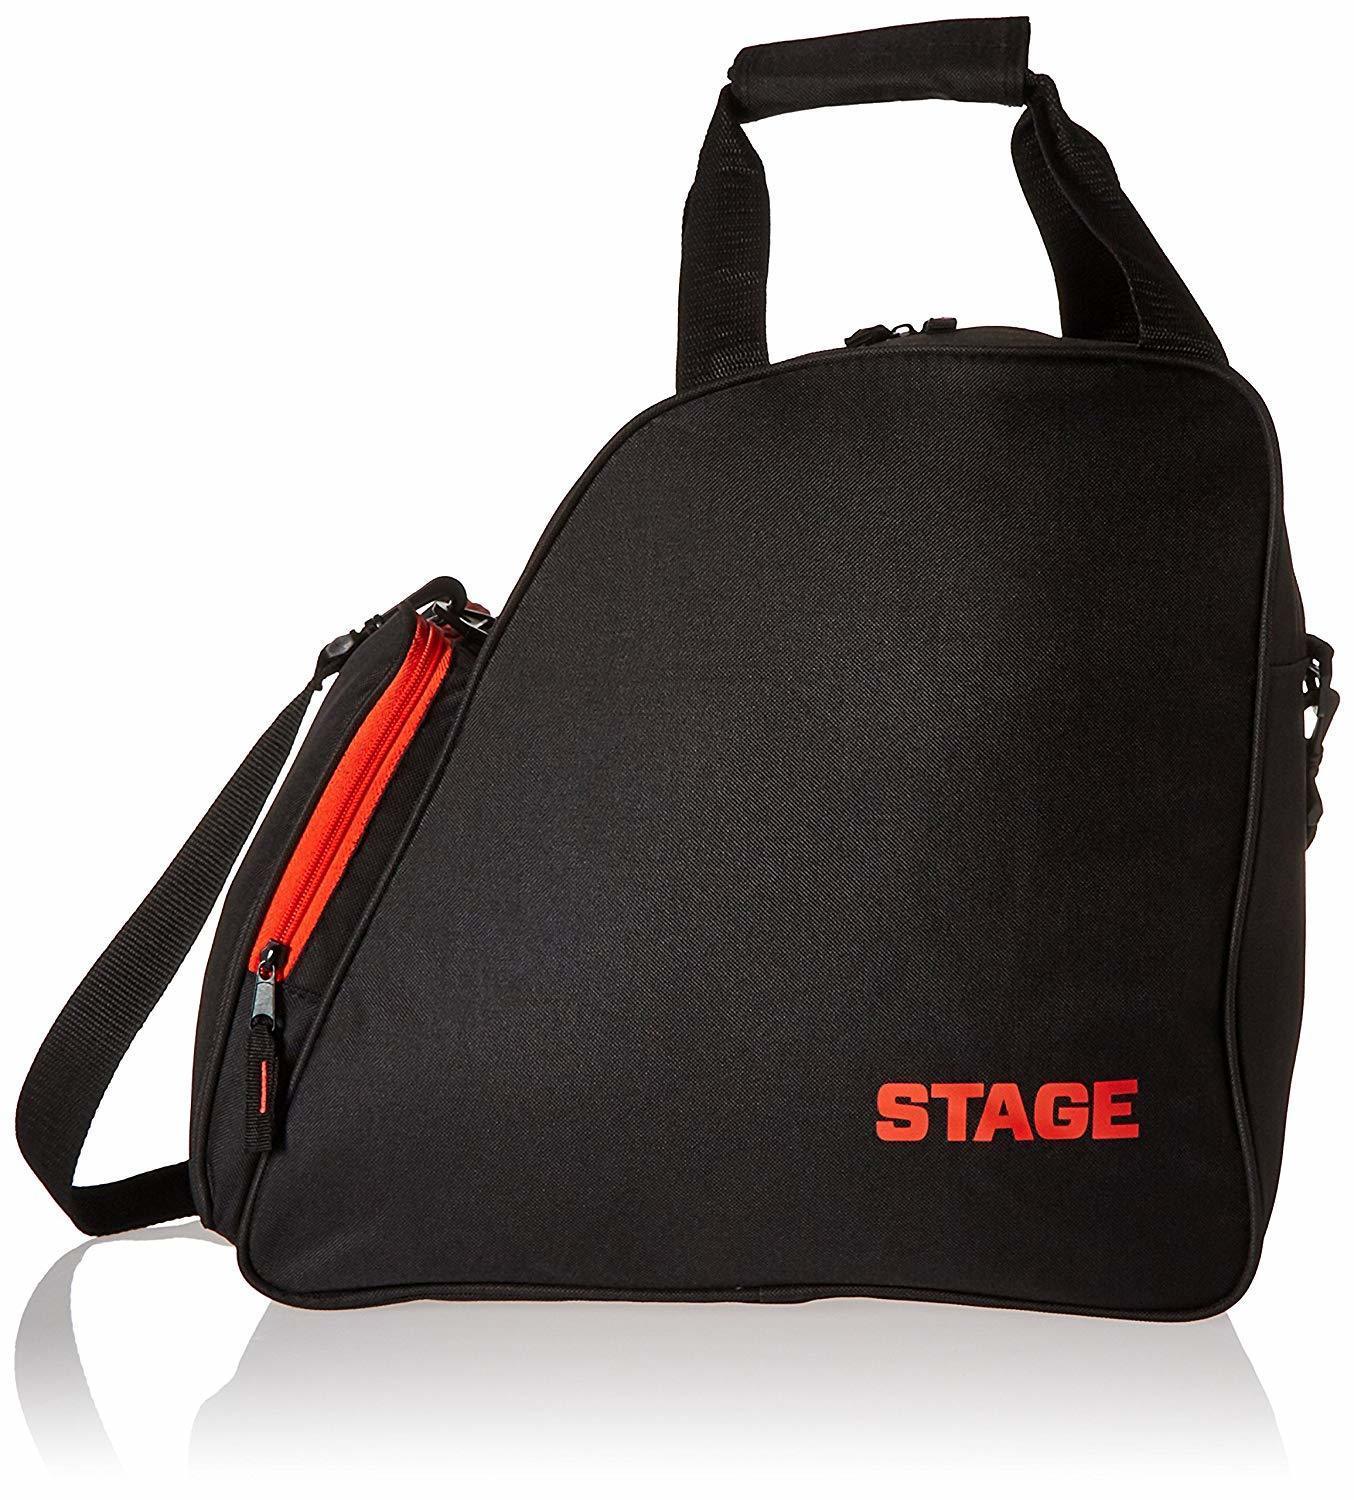 stage travel bag